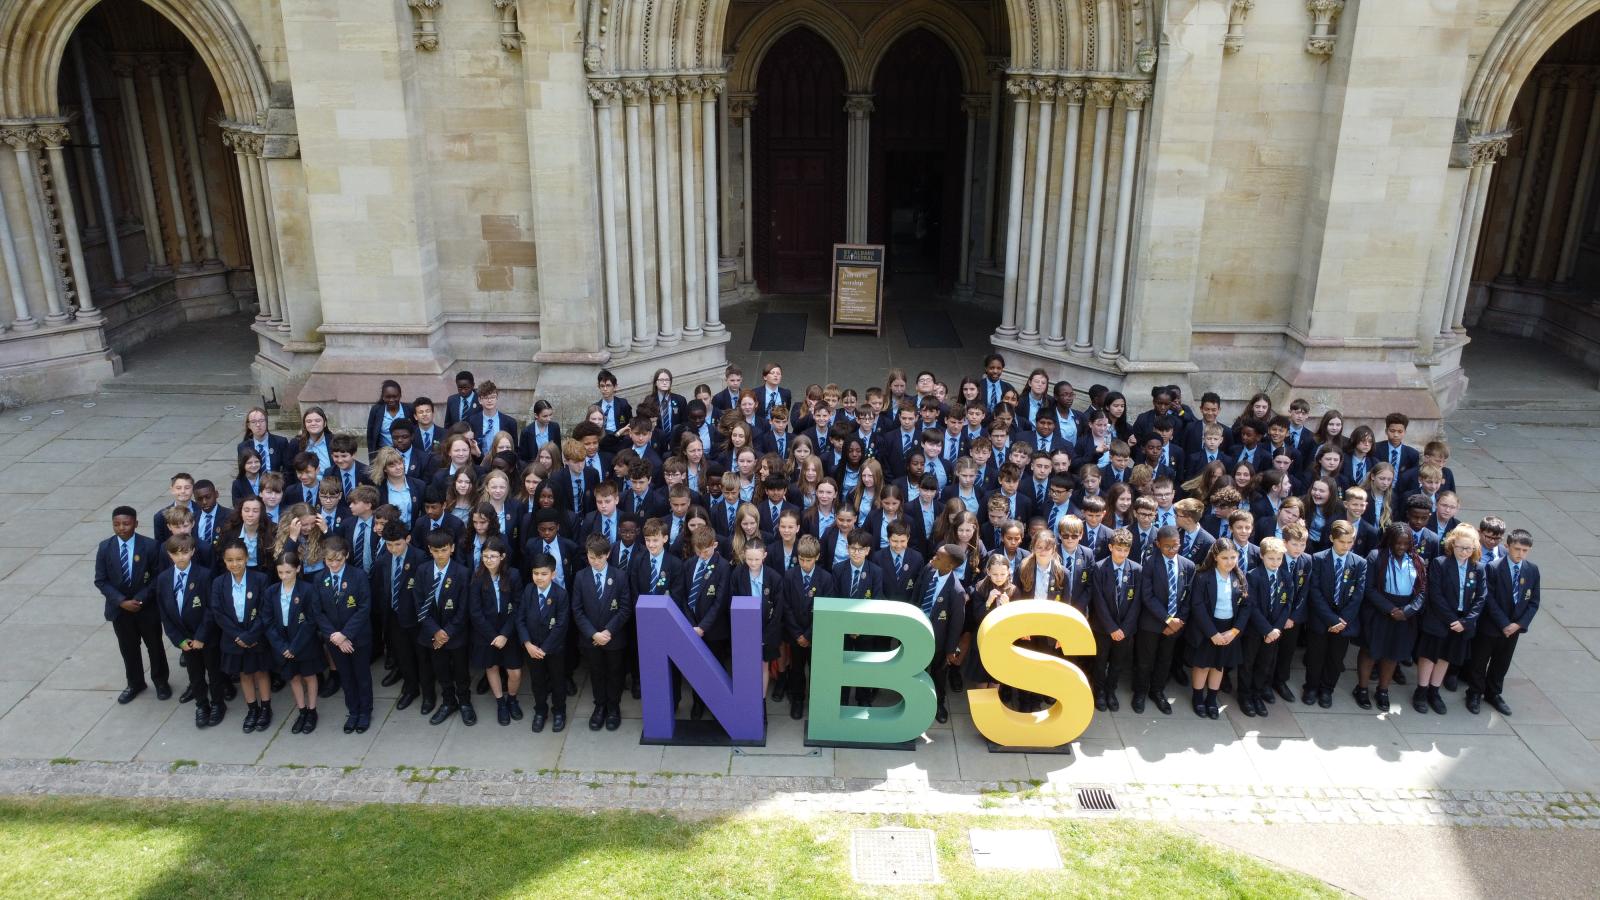 Nicholas Breakspear School celebrates 60th anniversary - Diocese of Westminster